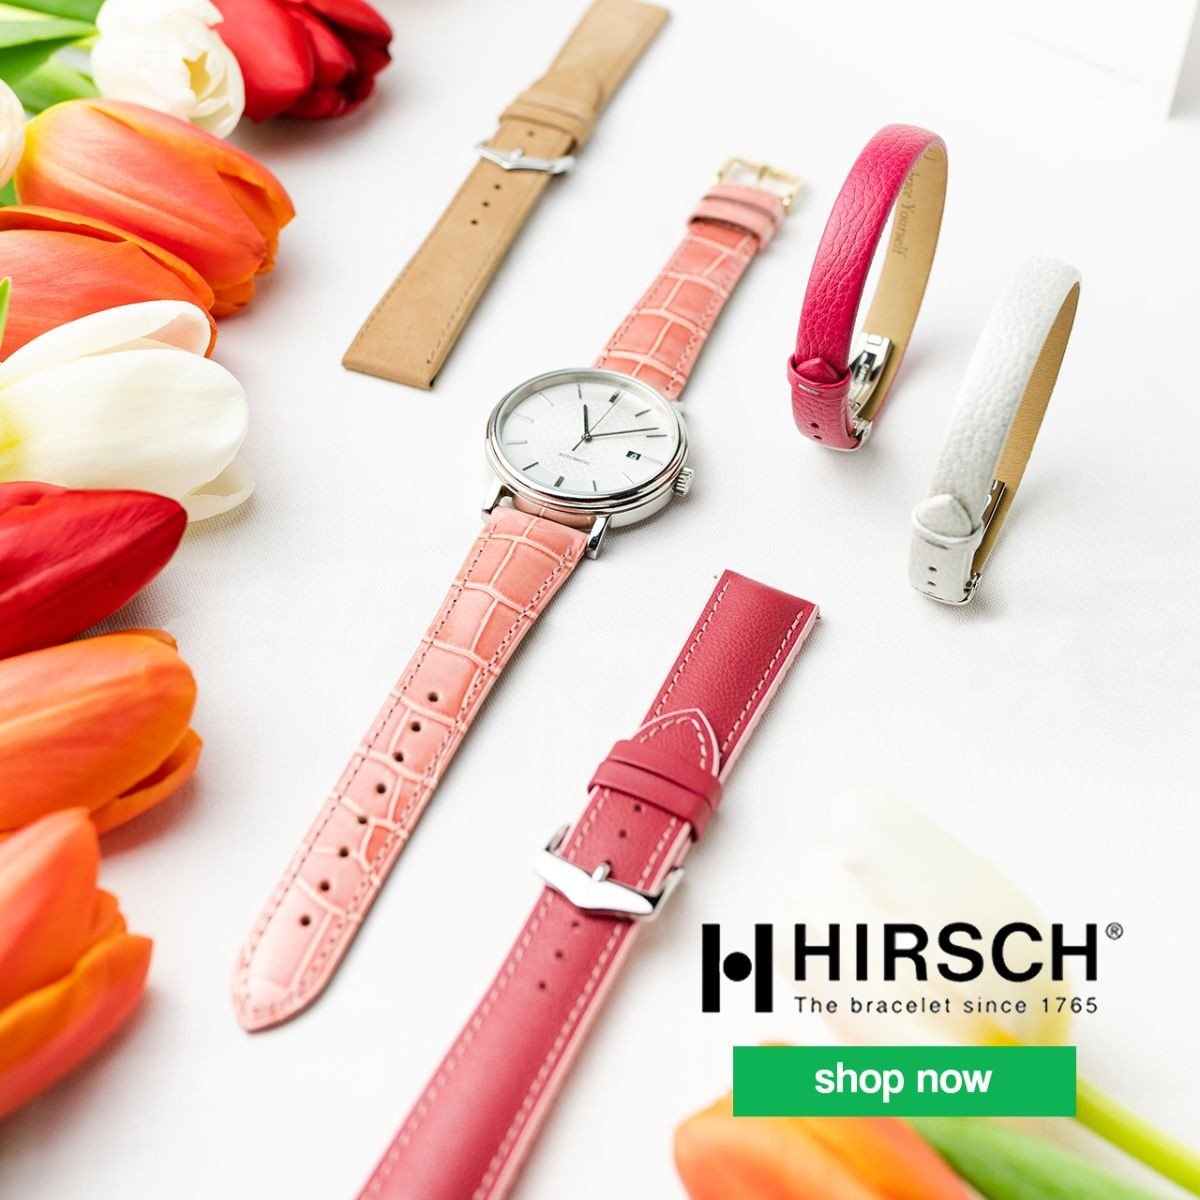 Braceletes de relógio Hirsch